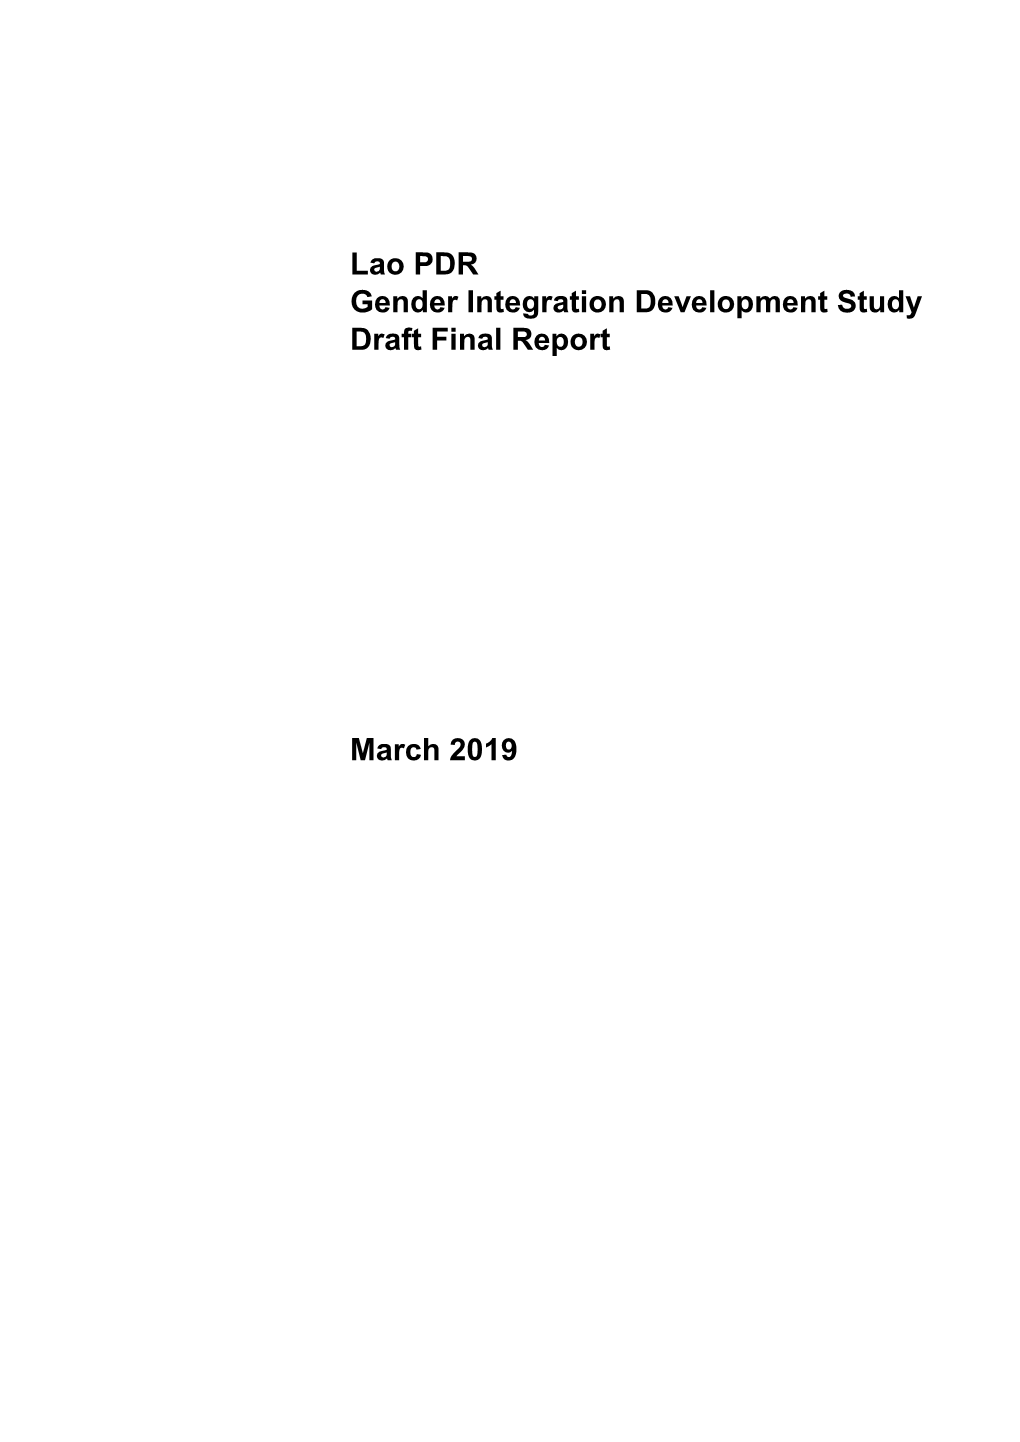 Lao PDR Gender Integration Development Study Draft Final Report